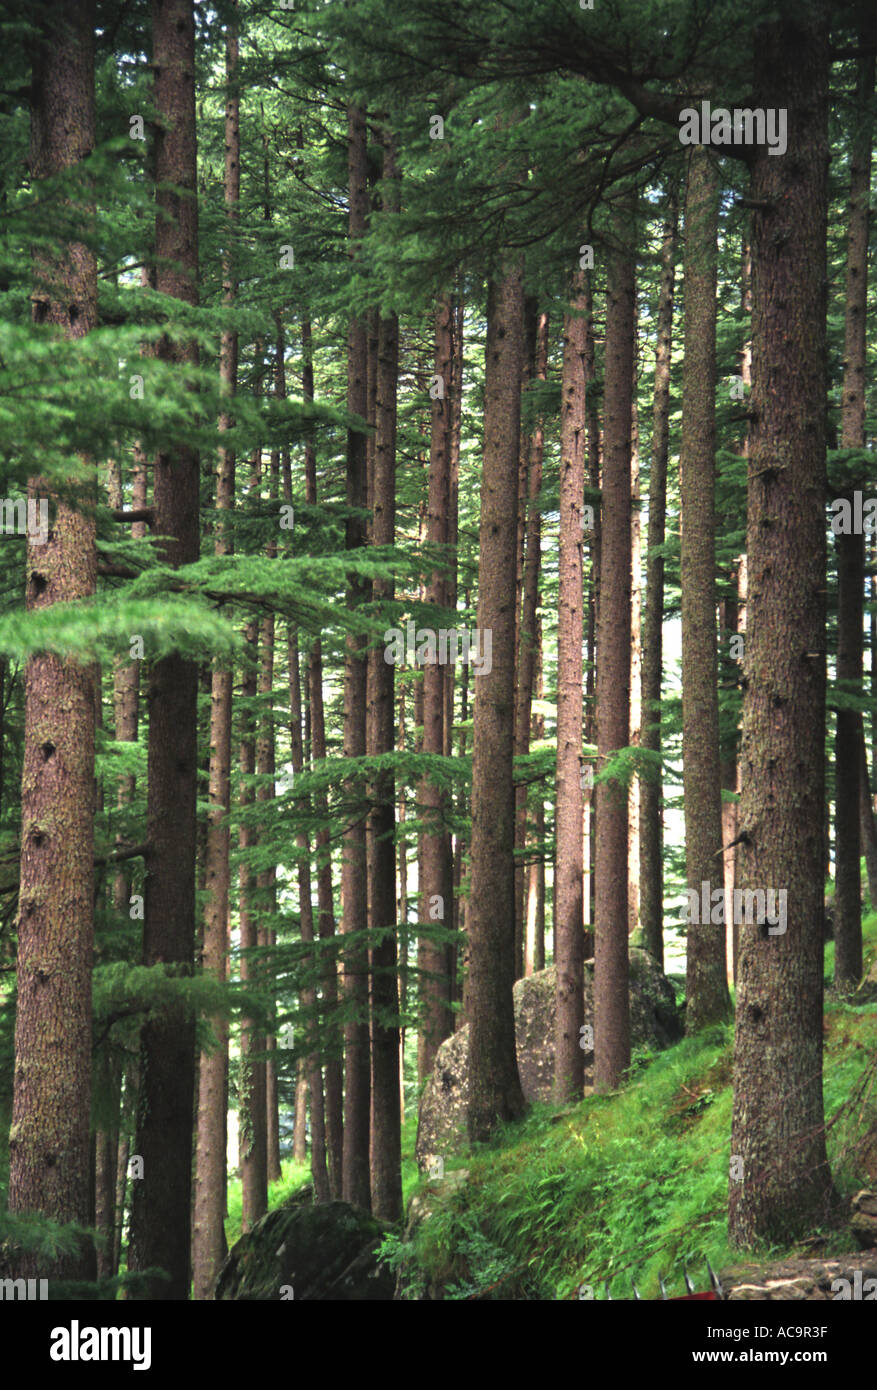 Deodar Cedar trees Manali Himachal Pradesh India IN35 28 Stock Photo